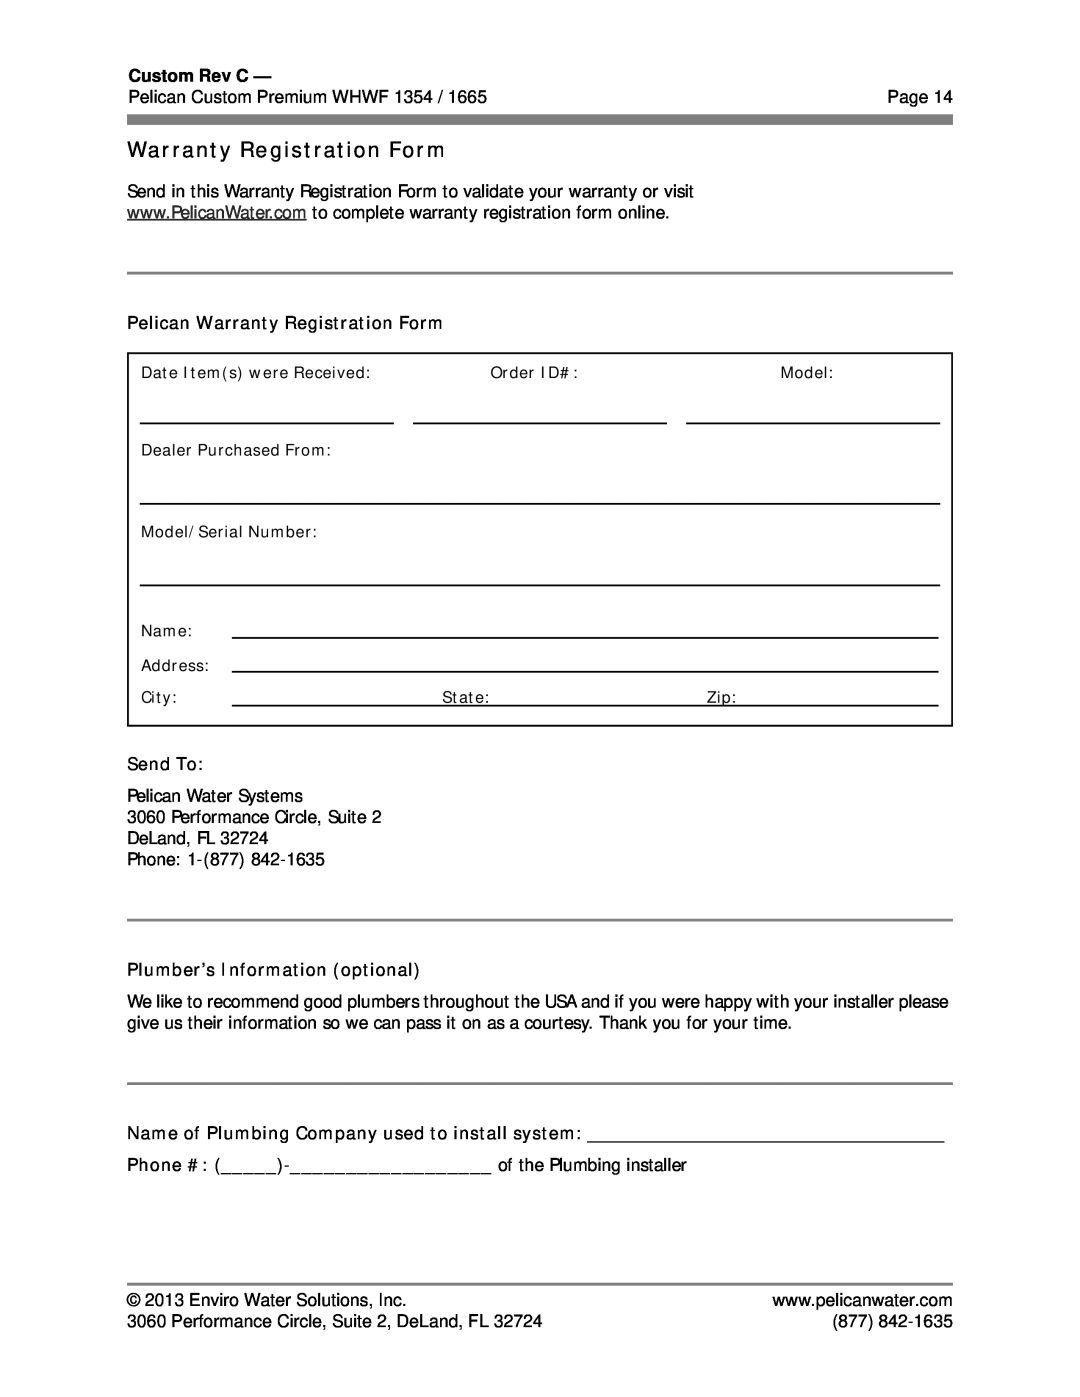 Pelican WHWF 1354 Custom Rev C, Pelican Warranty Registration Form, Send To, Plumber’s Information optional 